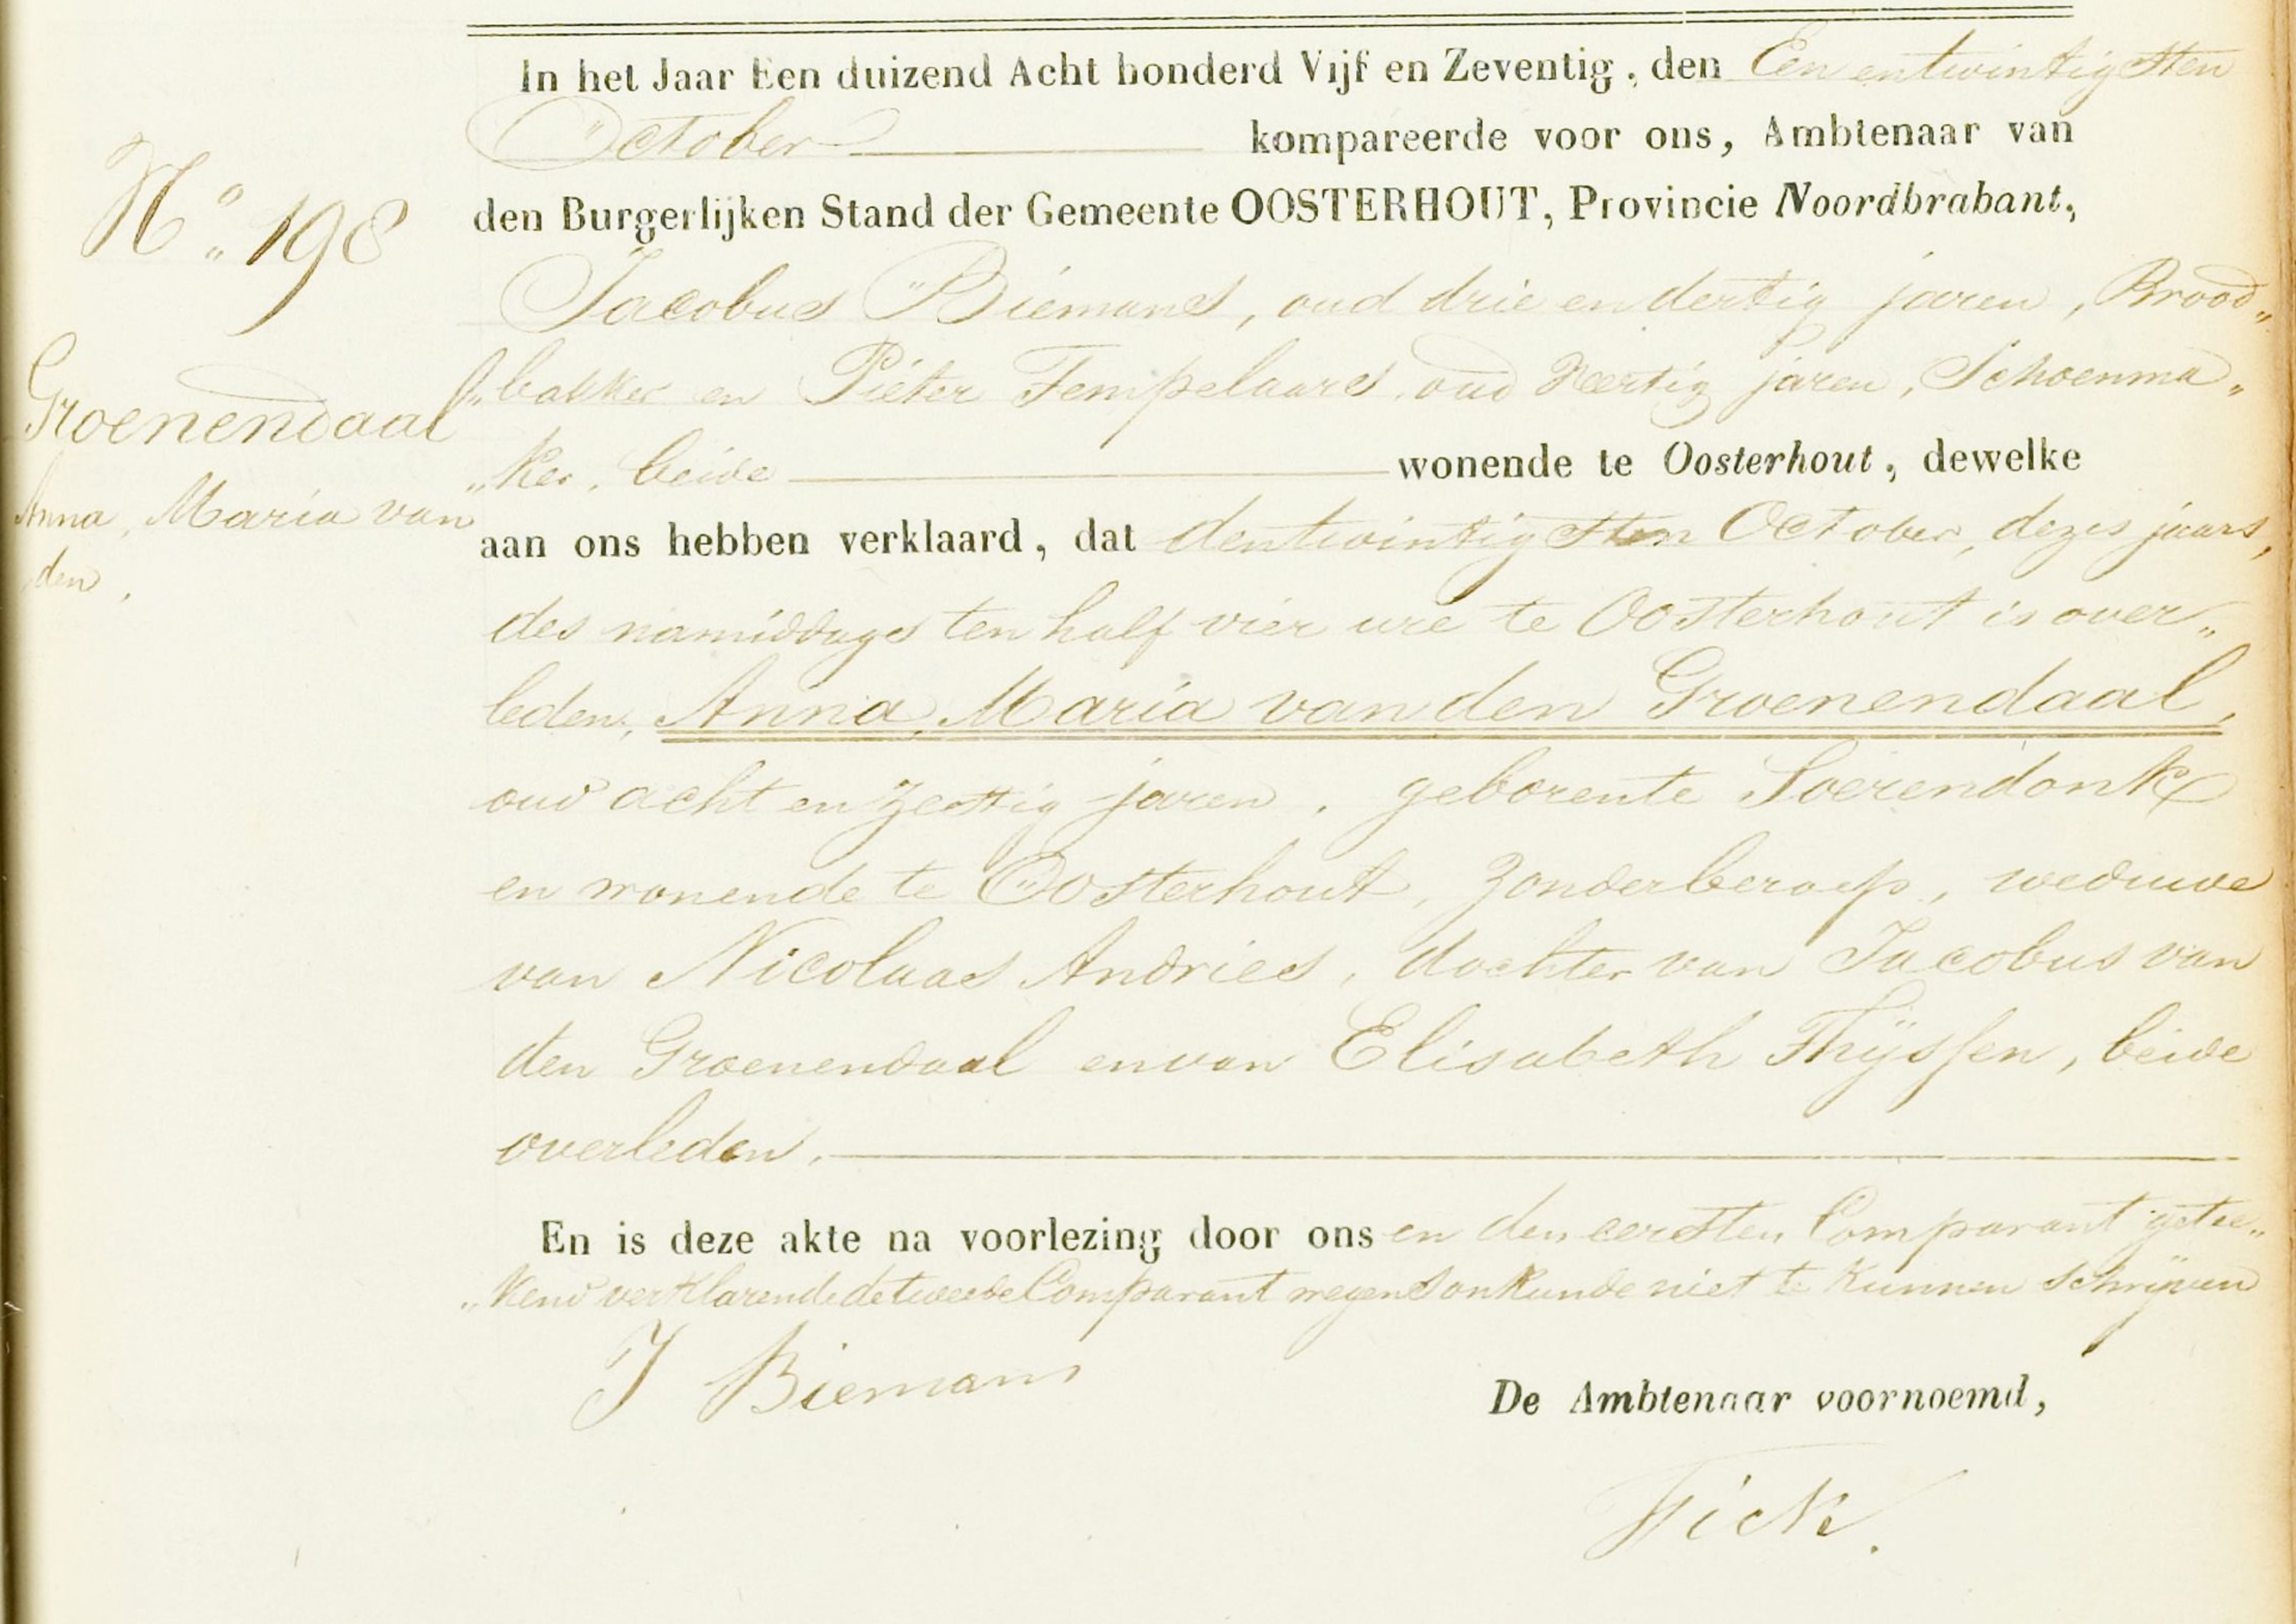 groenendaal_anna_maria_van__overleden_in_oosterhout_op_23_oktober_1875.jpg